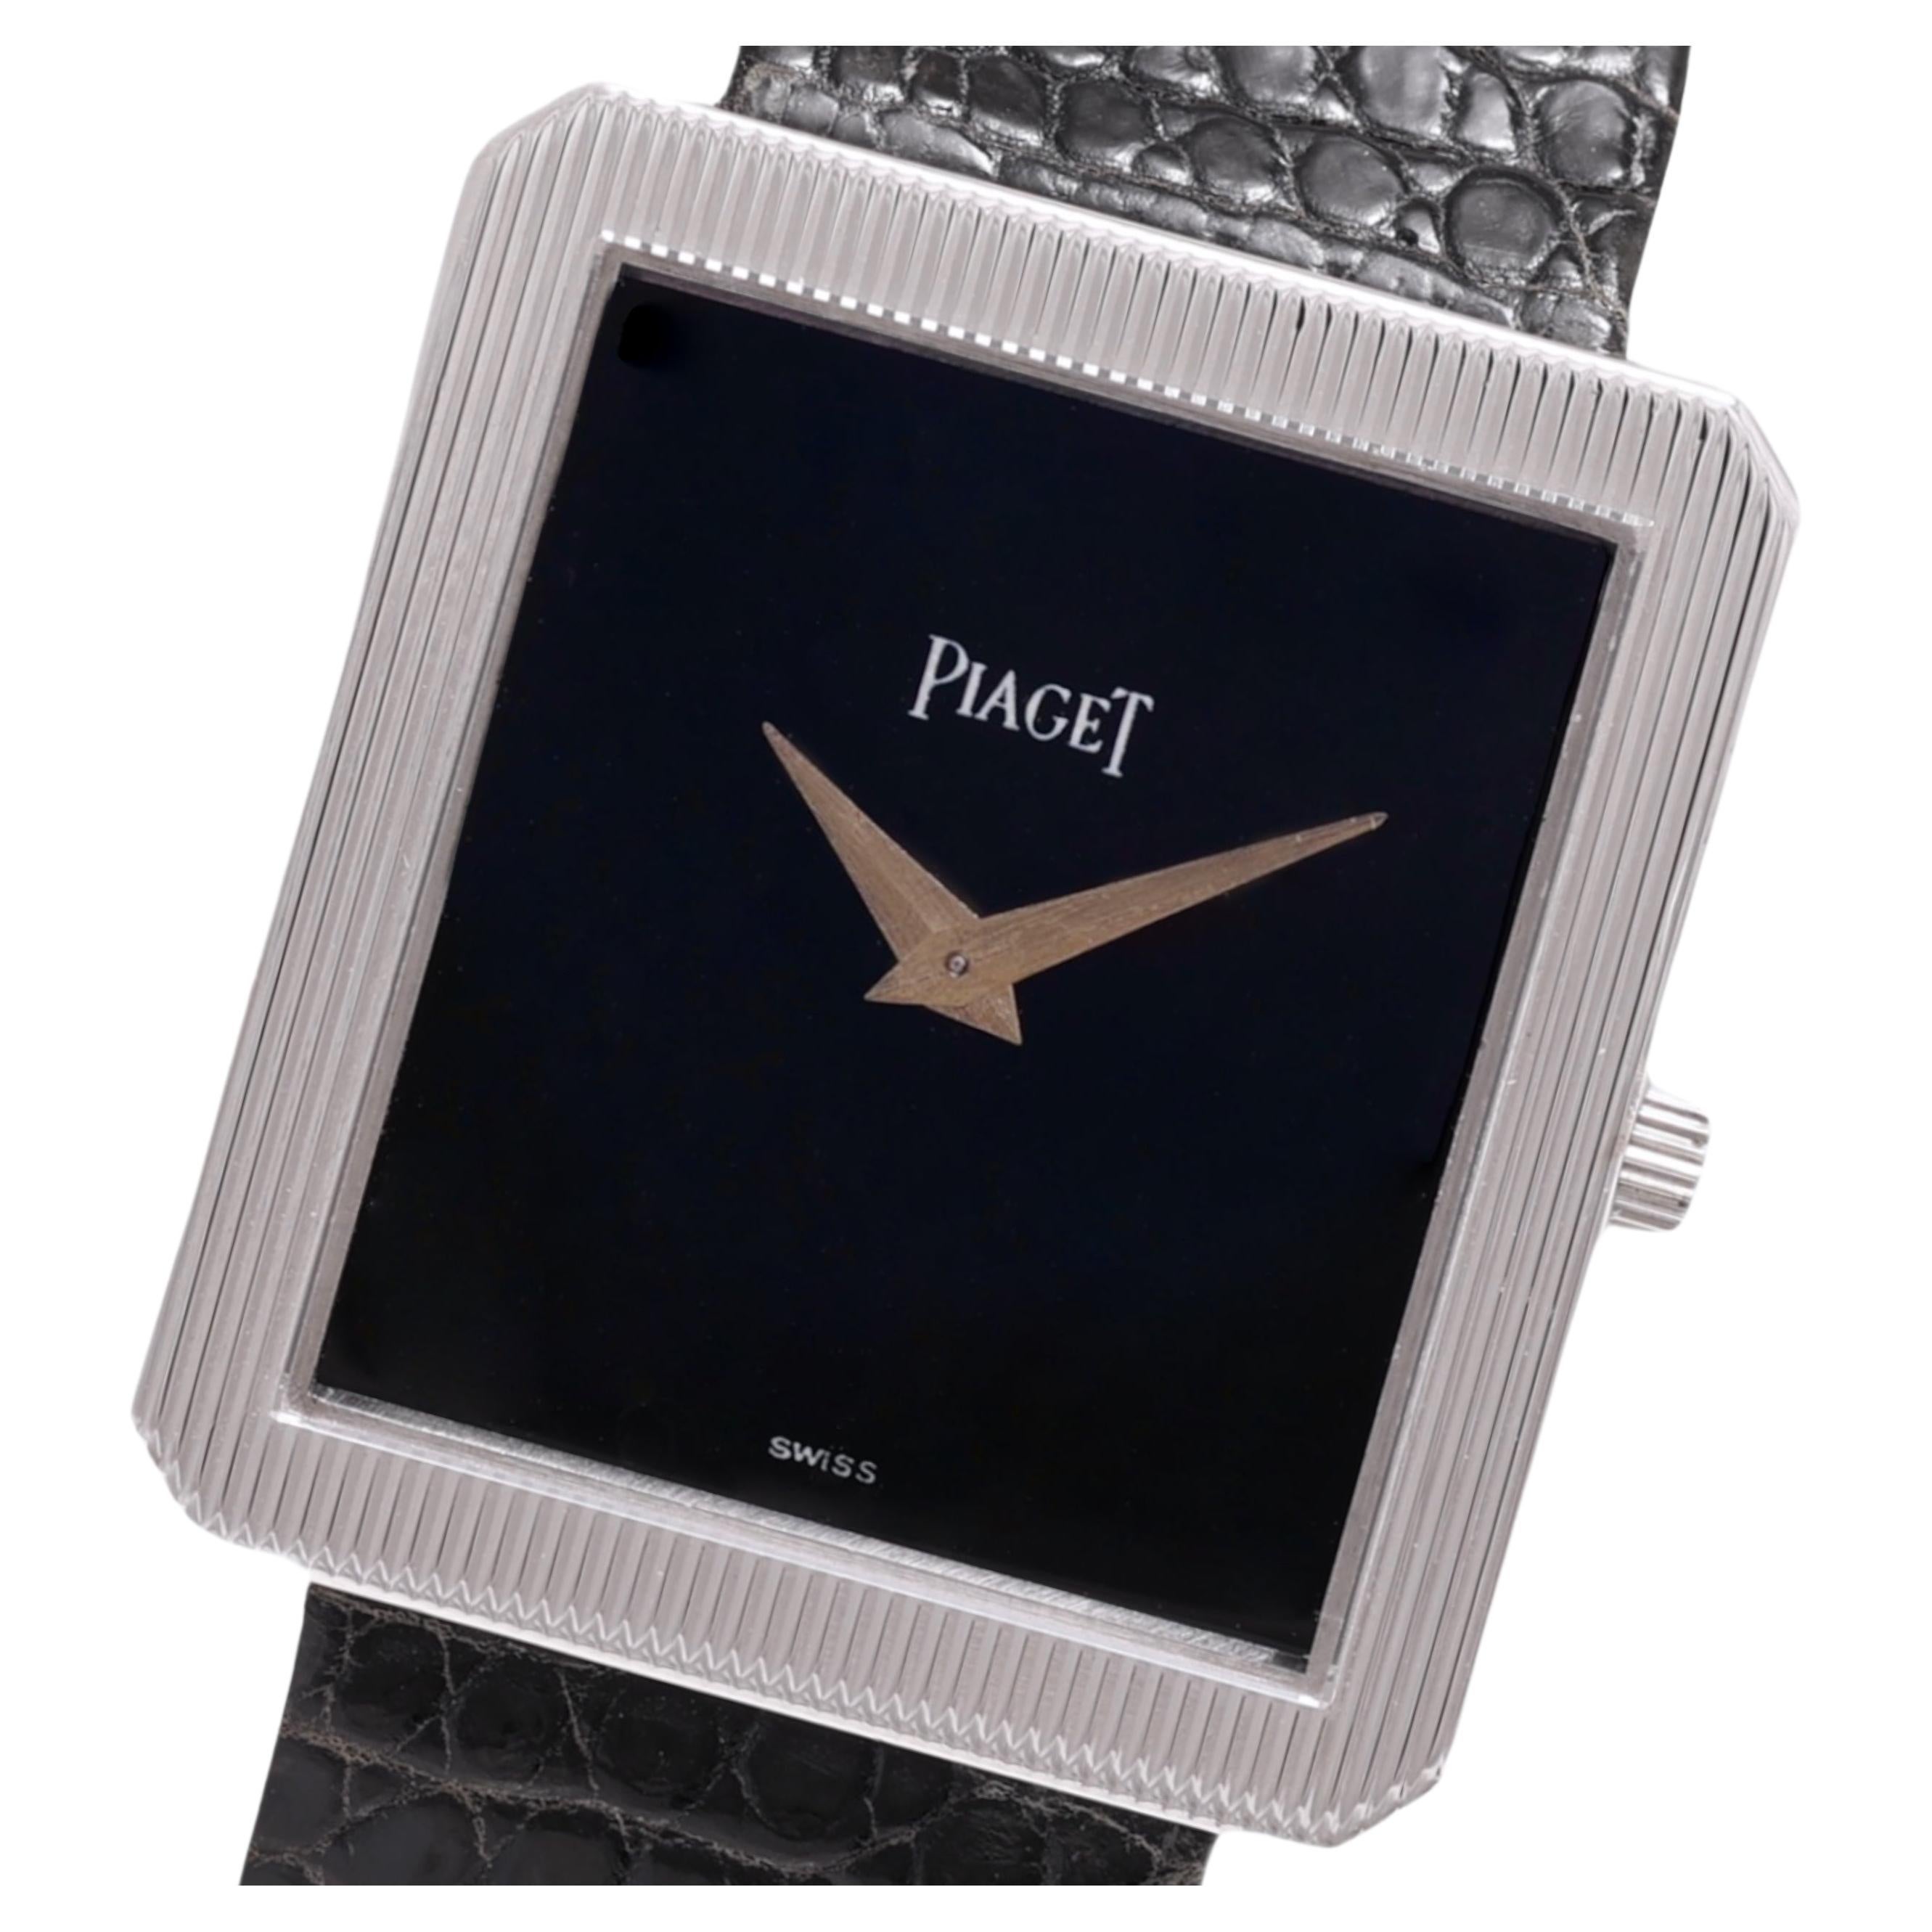 18 Kt White Gold Piaget Protocole Wrist Watch, Manual Winding